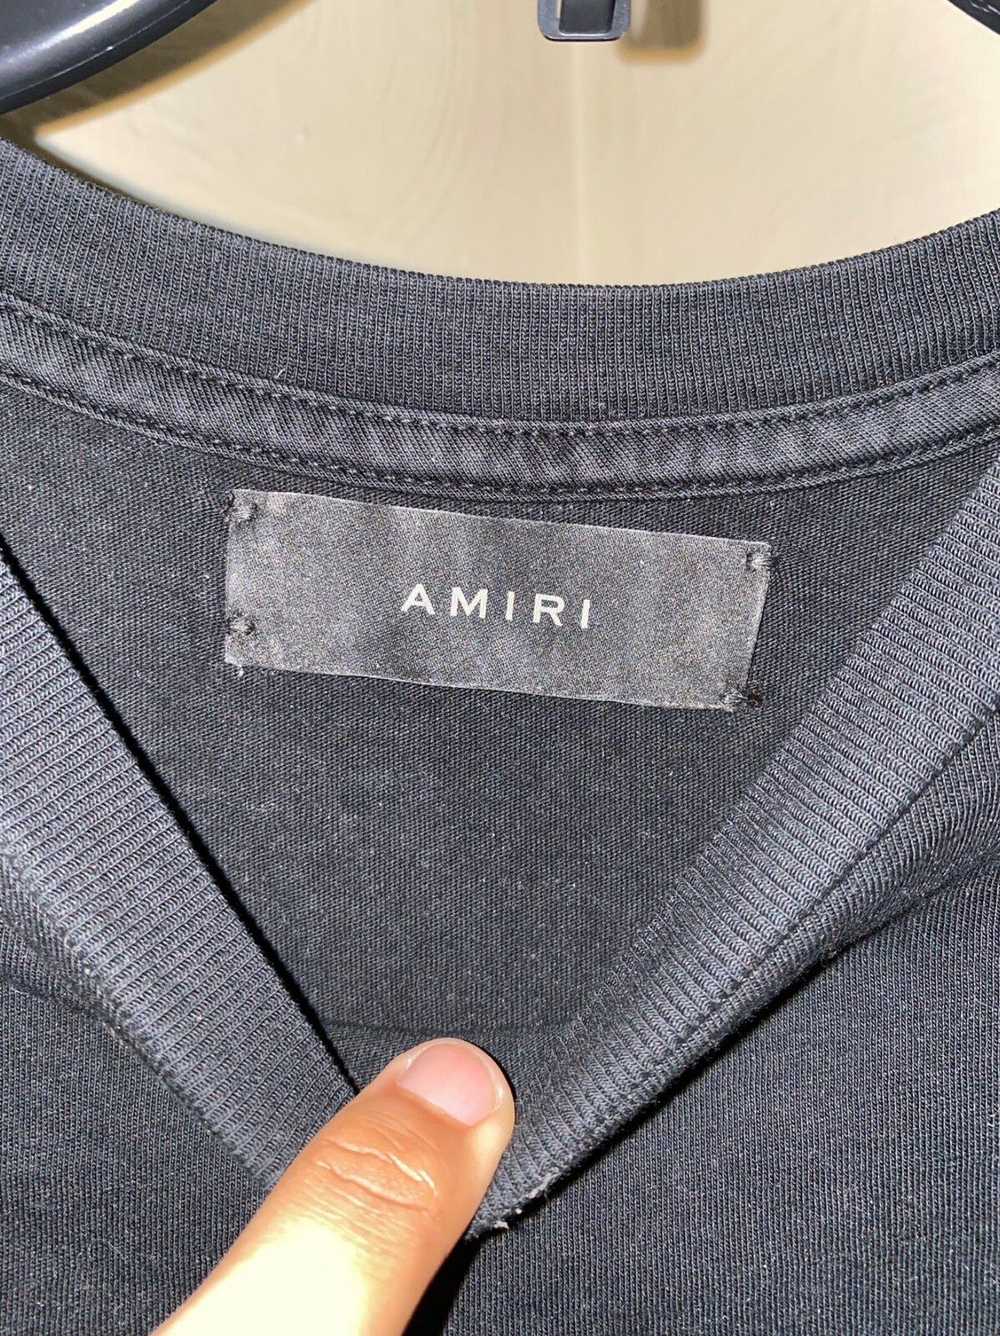 Amiri Amiri shirt - image 3